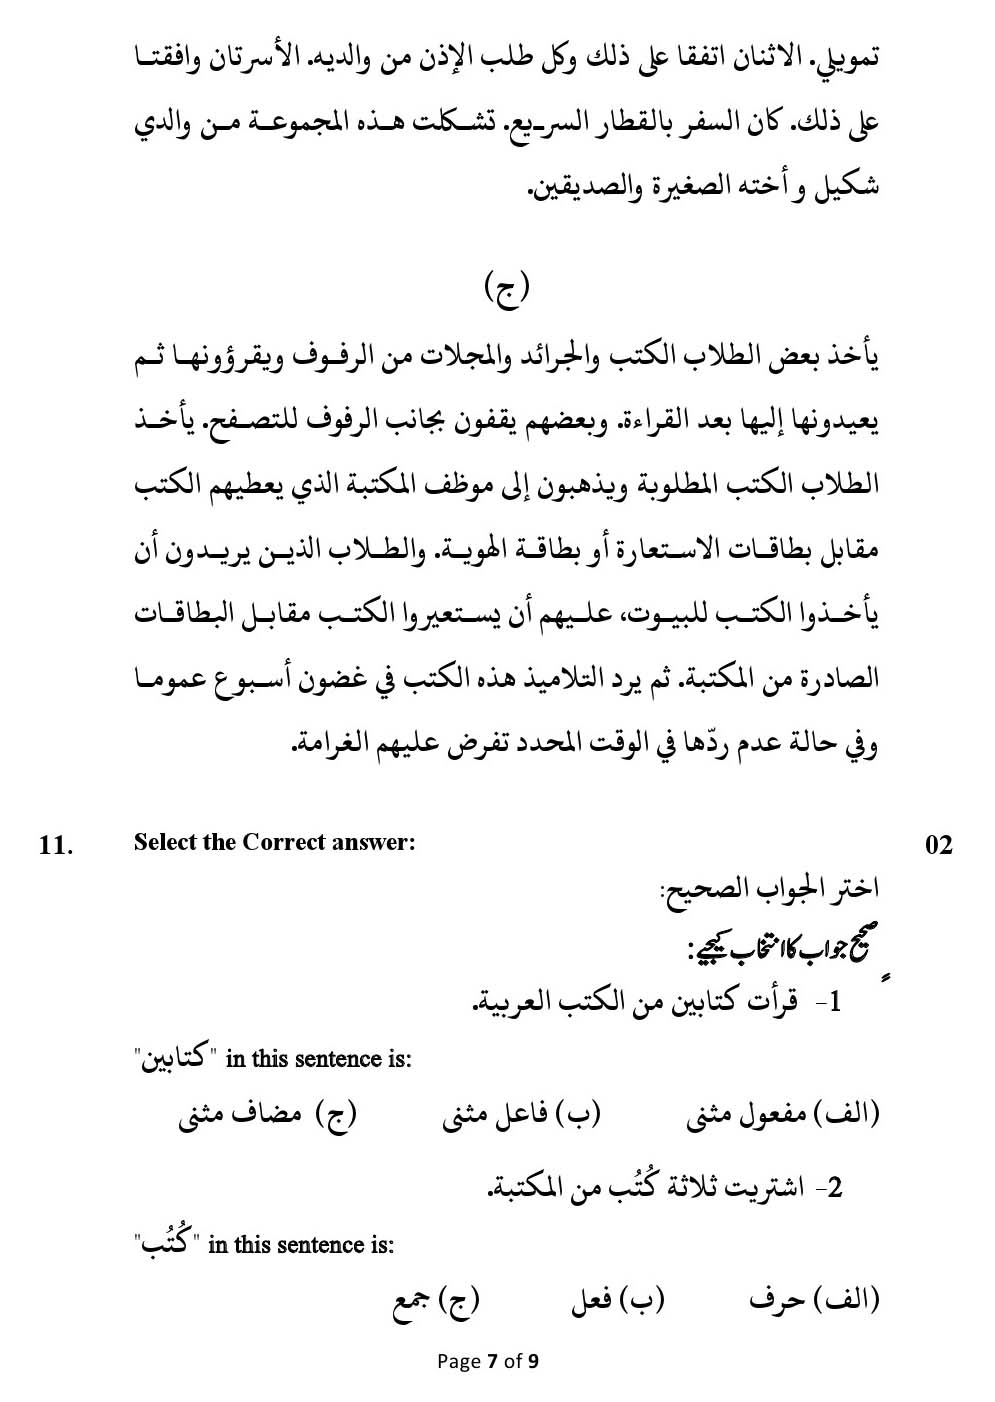 Arabic CBSE Class X Sample Question Paper 2018-19 - Image 7